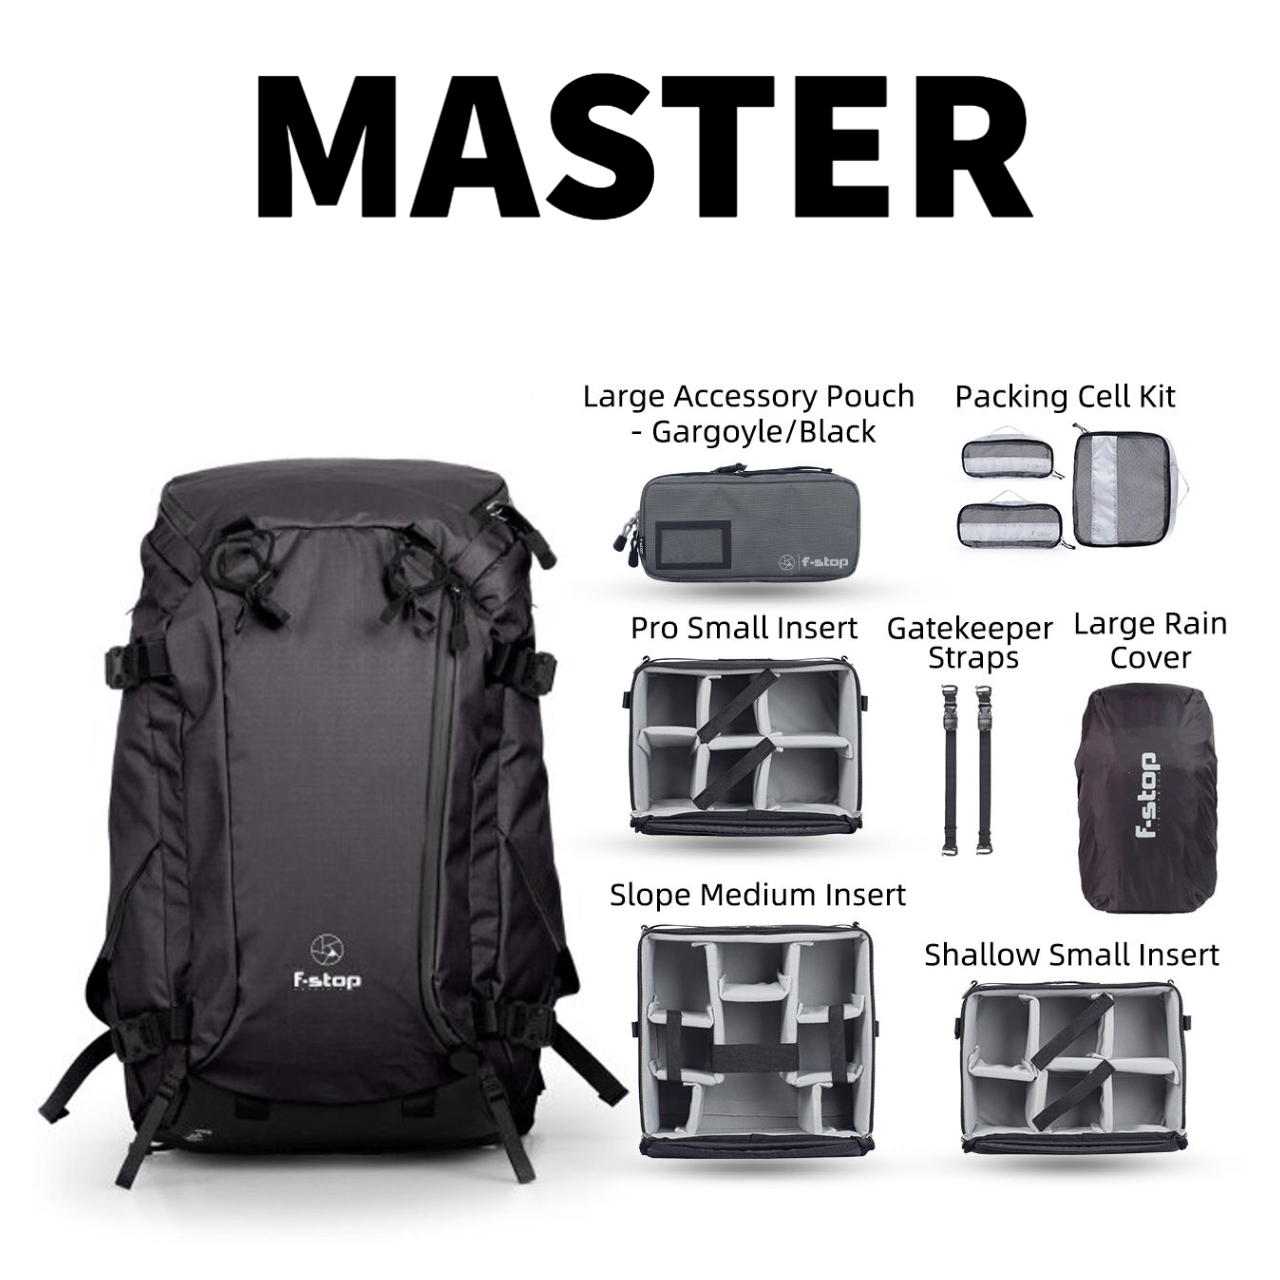 f-stop Lotus 32 liter camera backpack Master Bundle in the Anthracite Black color